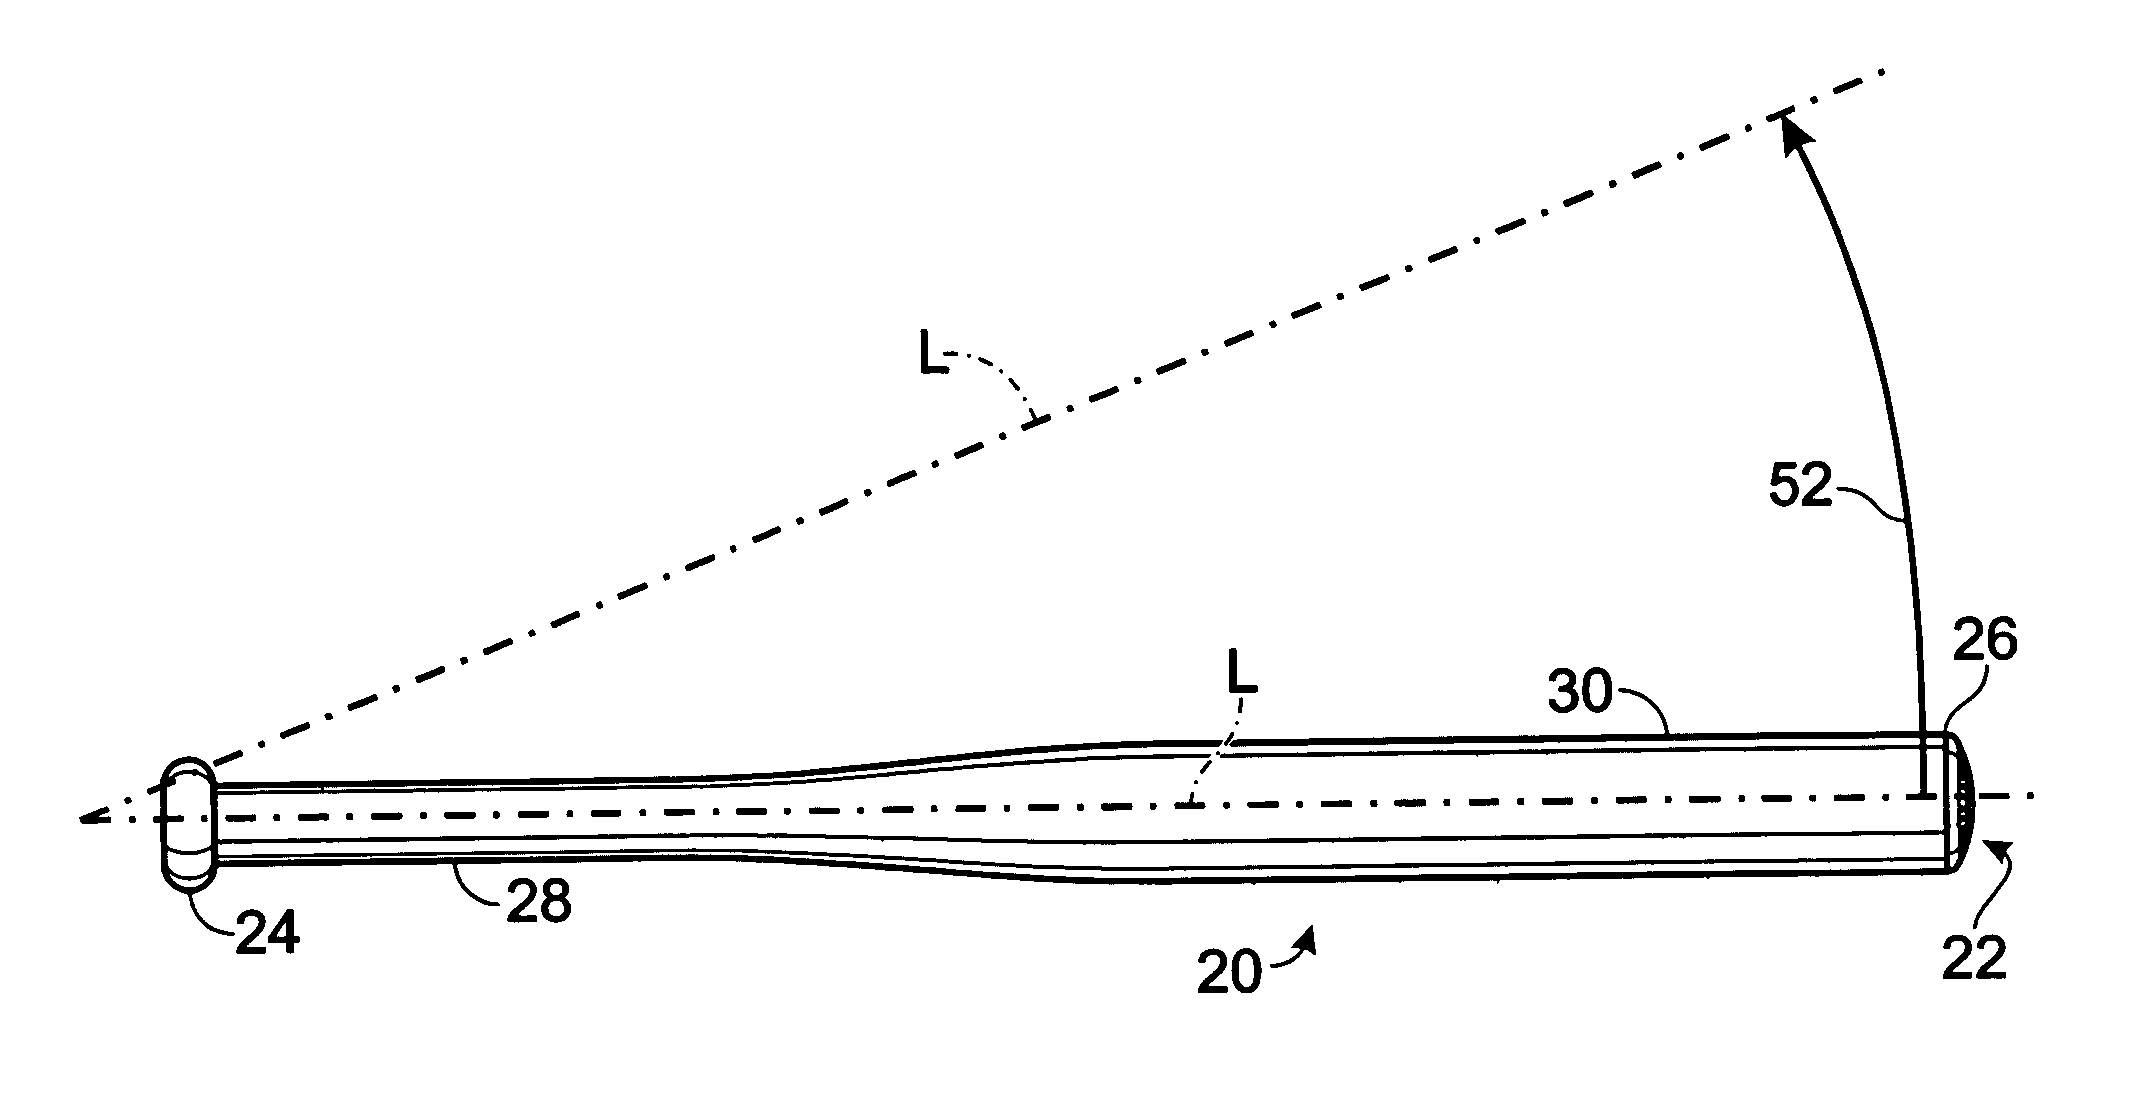 End configuration for a baseball bat